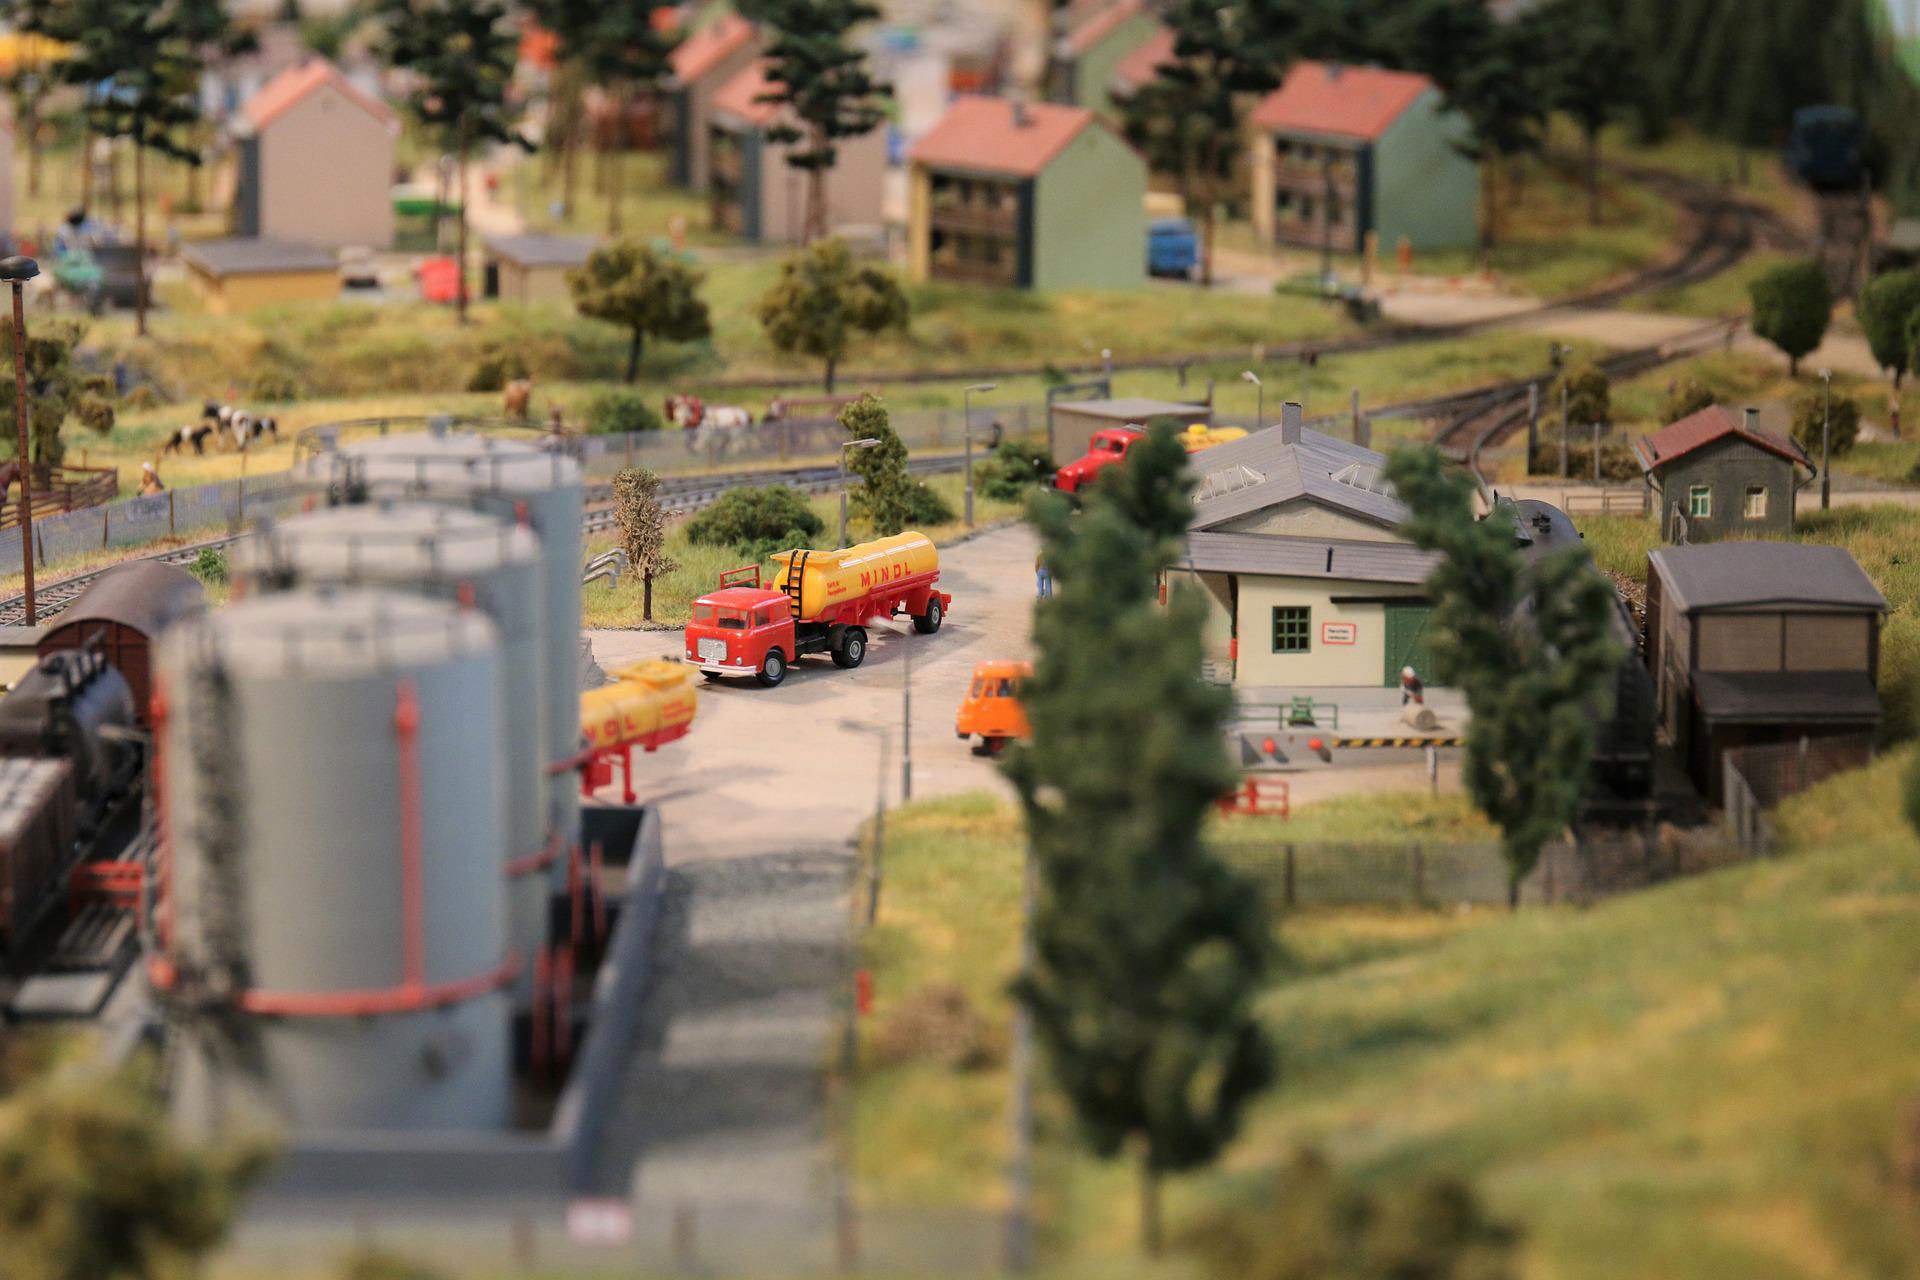 beautiful model railway scenery